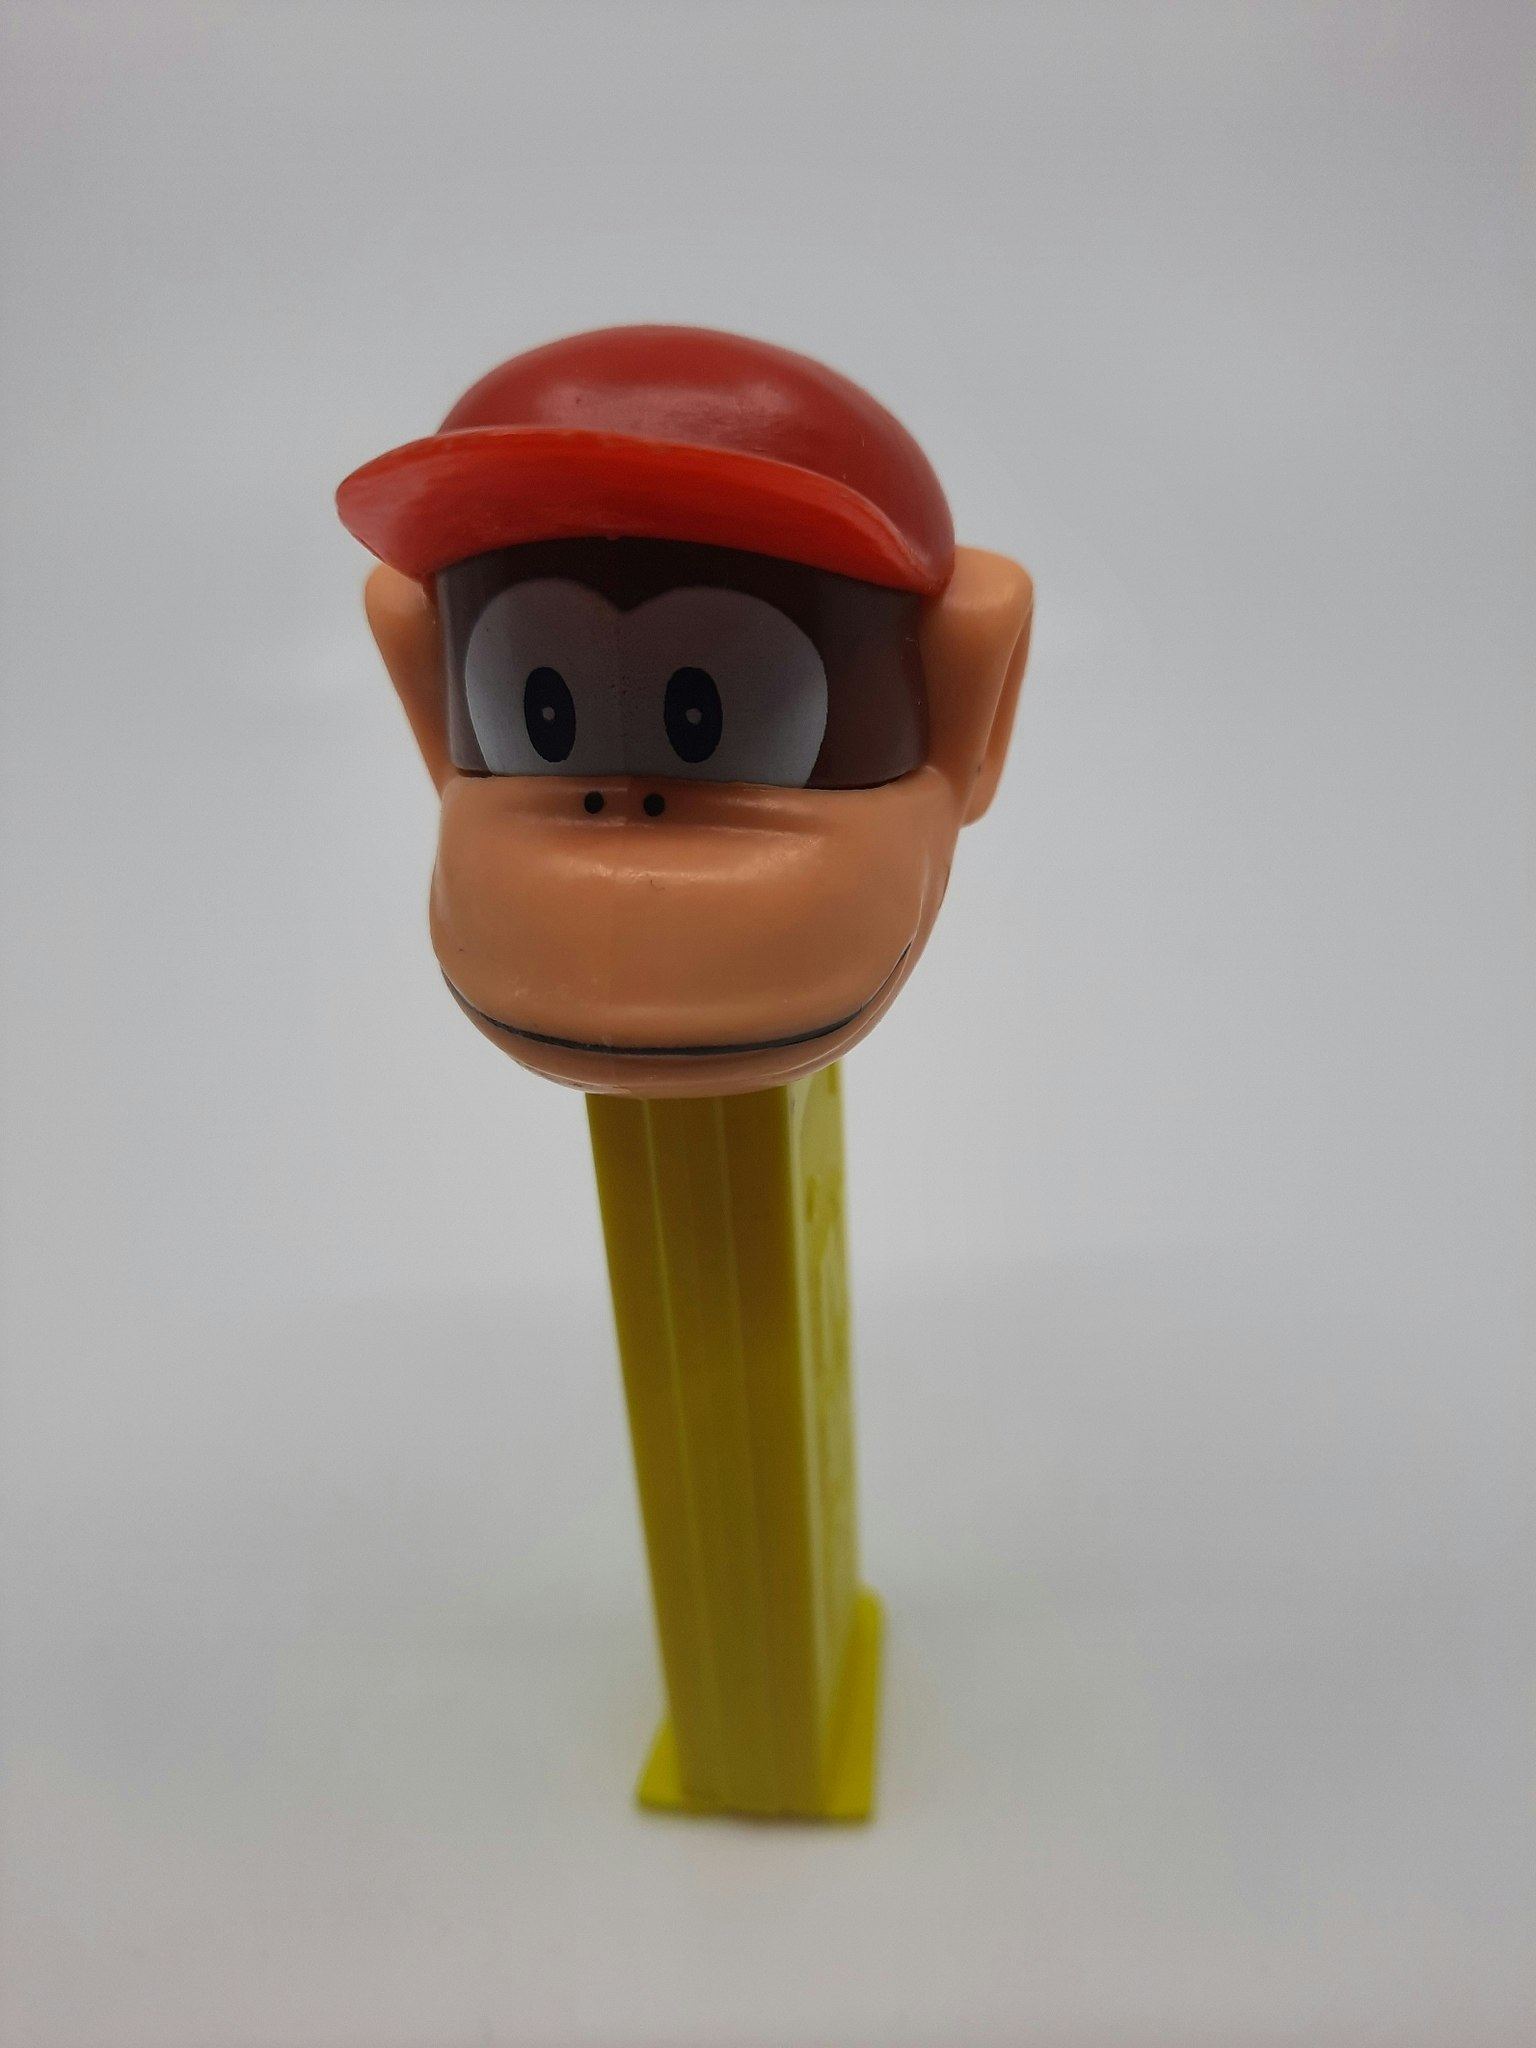 Pez dispenser - Diddy Kong / Nintendo (Skadet)